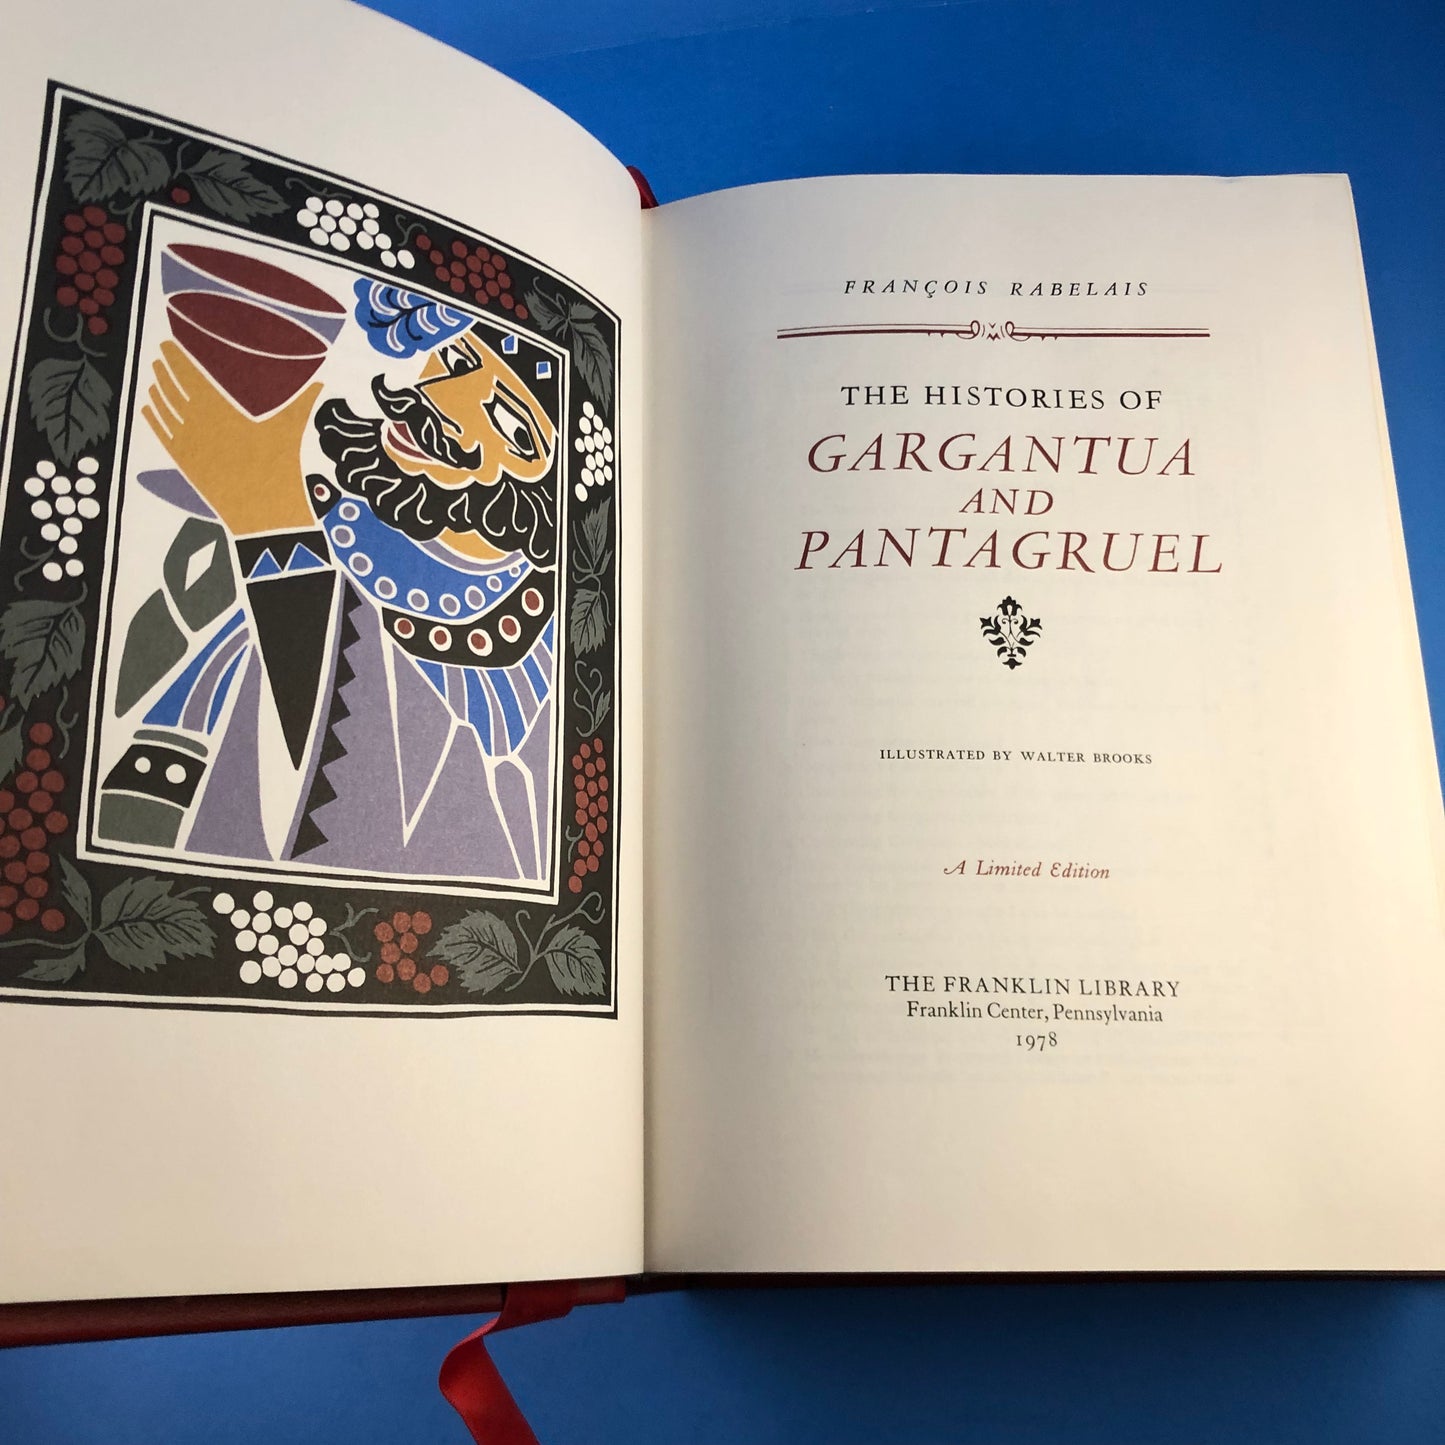 The Histories of Gargantua and Pantagruel